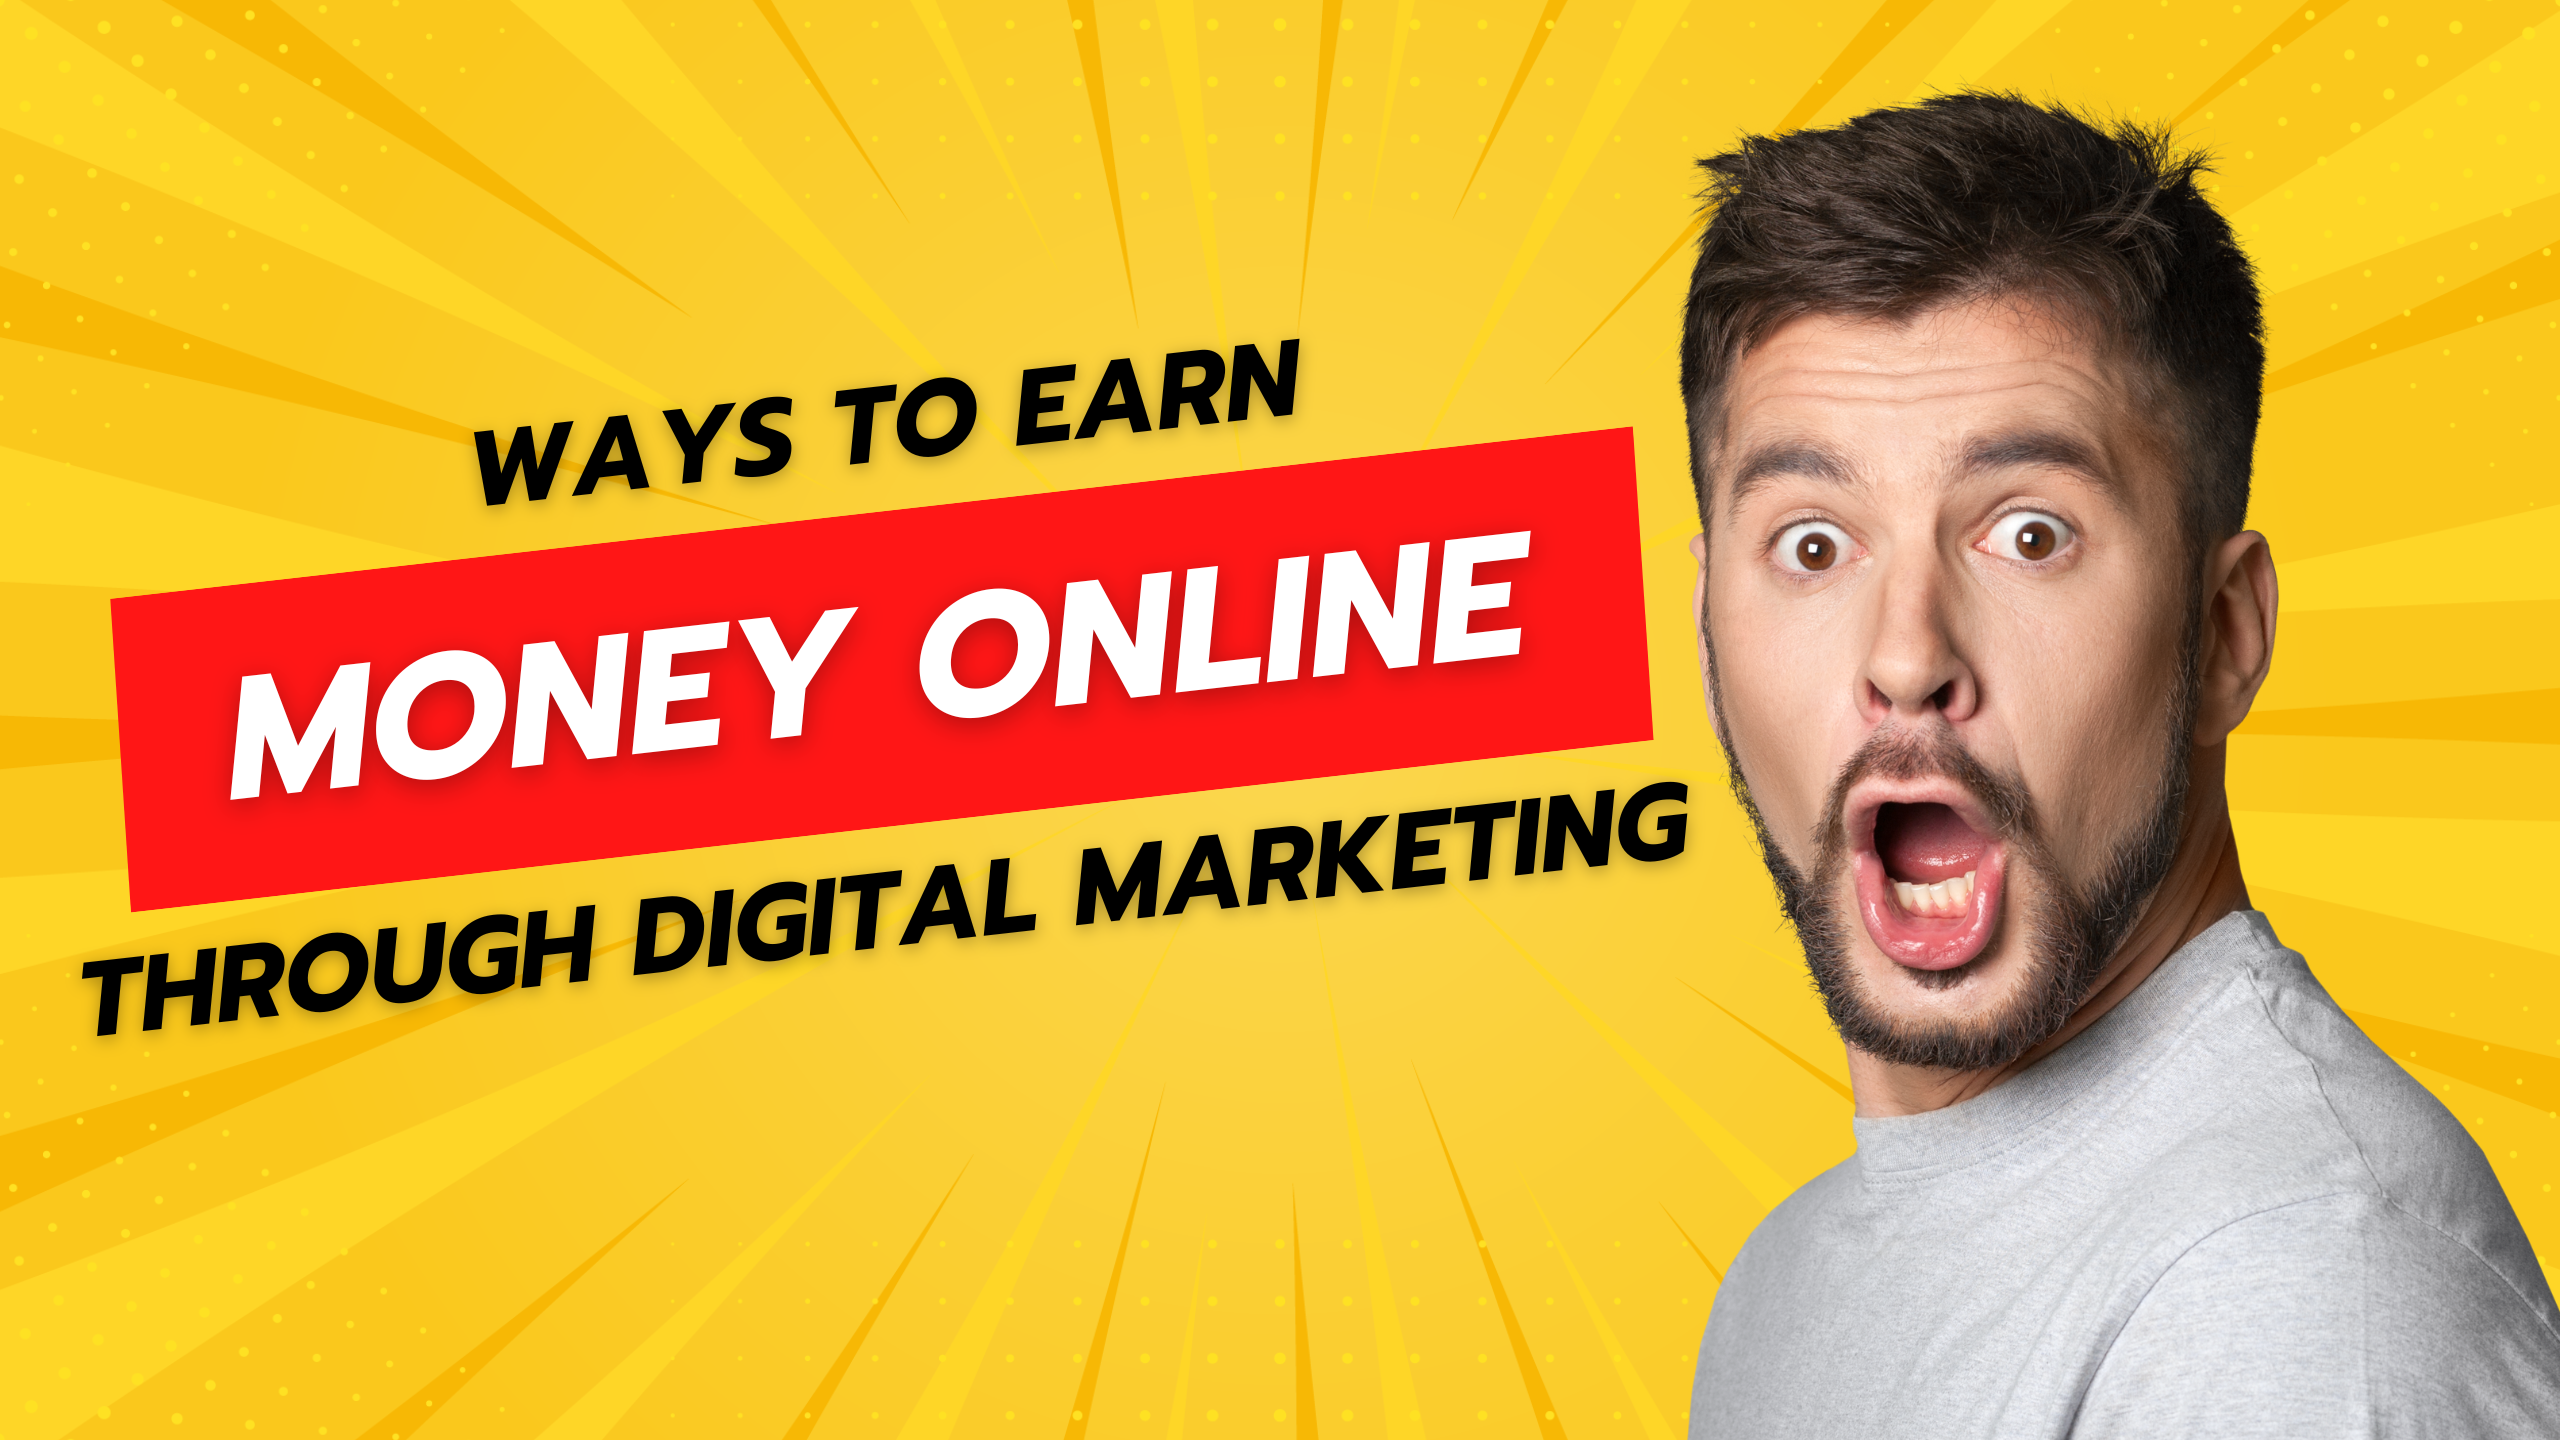 10 Ways to Earn Money Online Through Digital Marketing